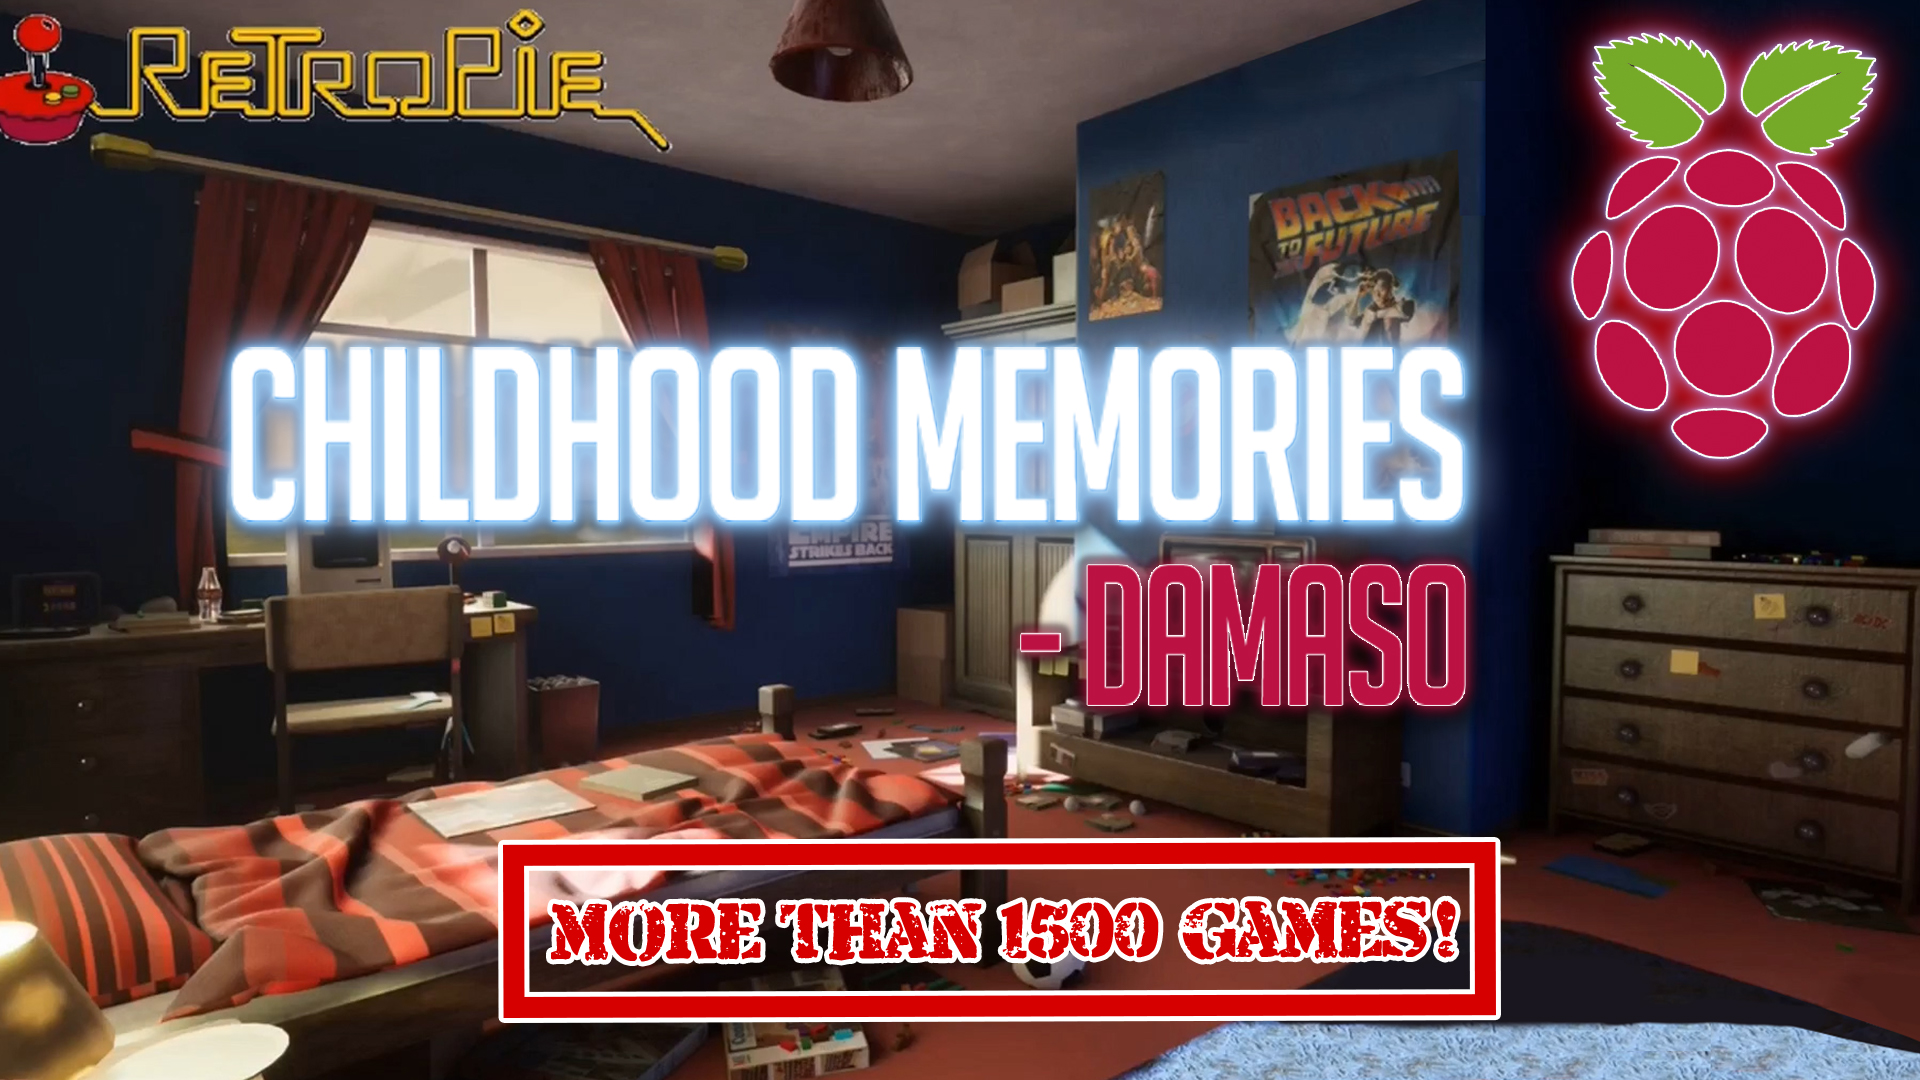 Childhood Memories by Damaso